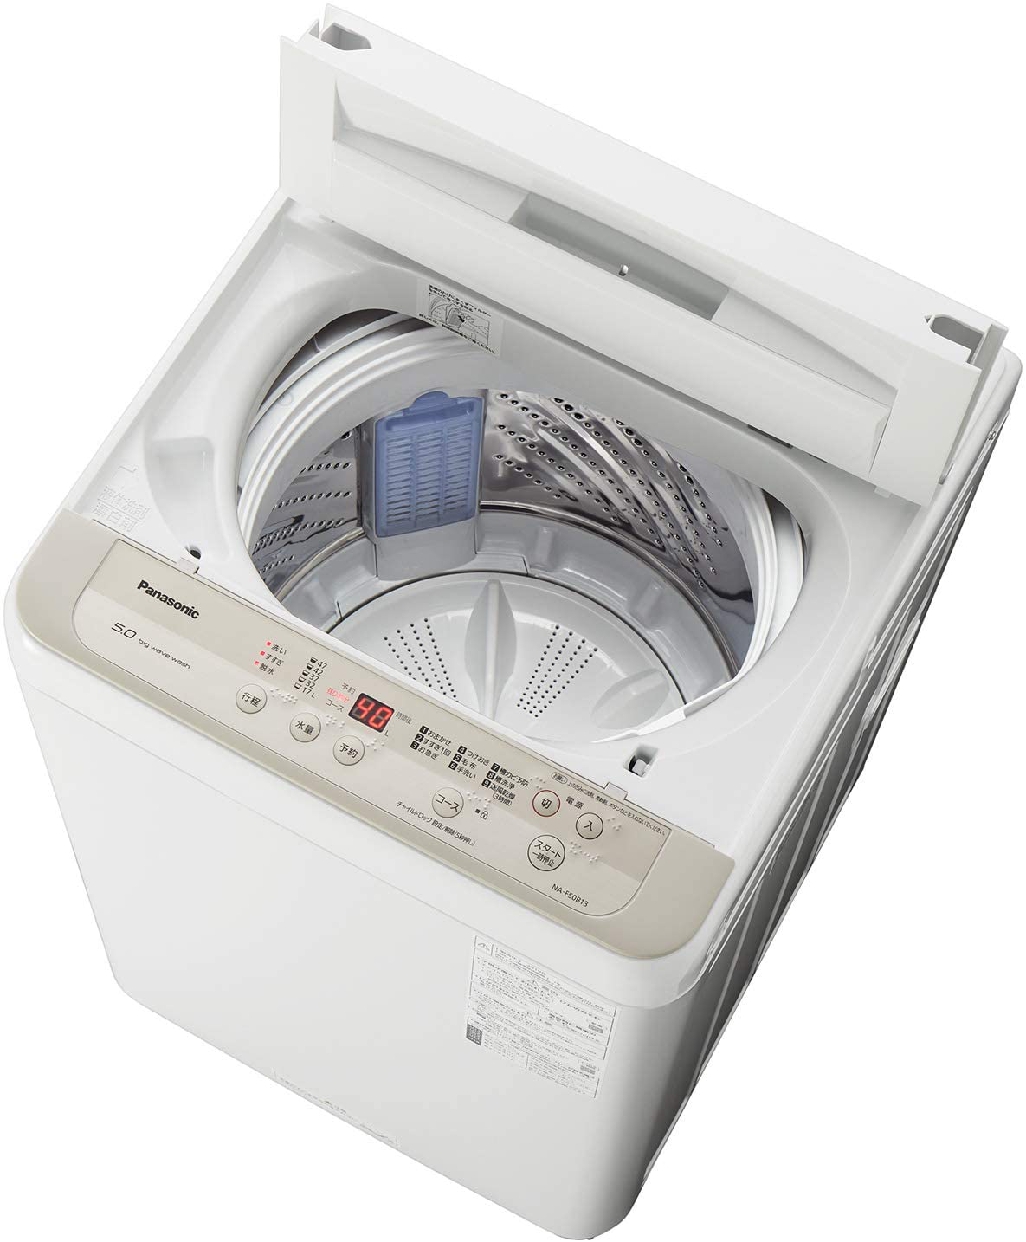 Panasonic(パナソニック) 全自動洗濯機 NA-F50B13の商品画像3 